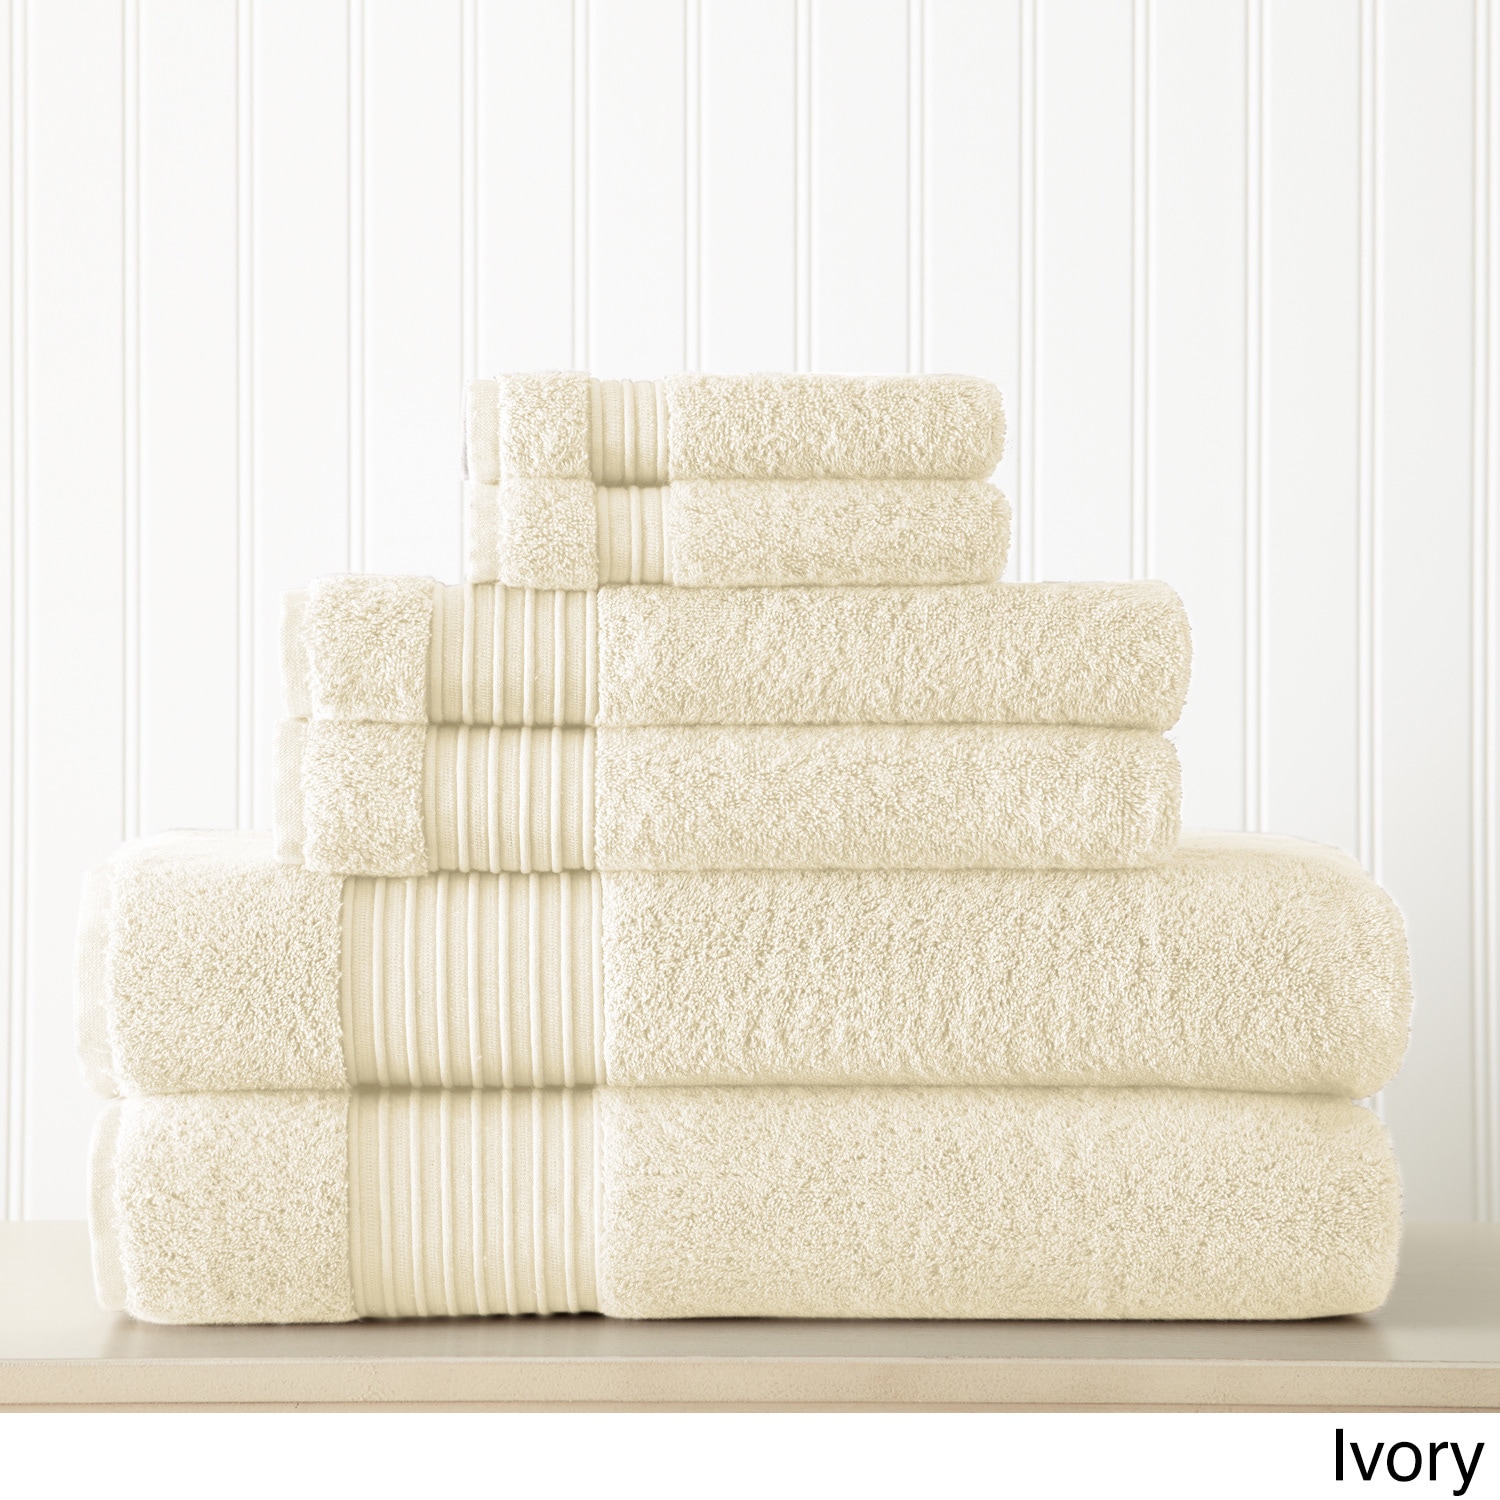 https://ak1.ostkcdn.com/images/products/15200431/Amraupur-Overseas-6-Piece-700GSM-100-Turkish-cotton-towel-set-856208ea-be51-4493-aba0-e842390e0940.jpg